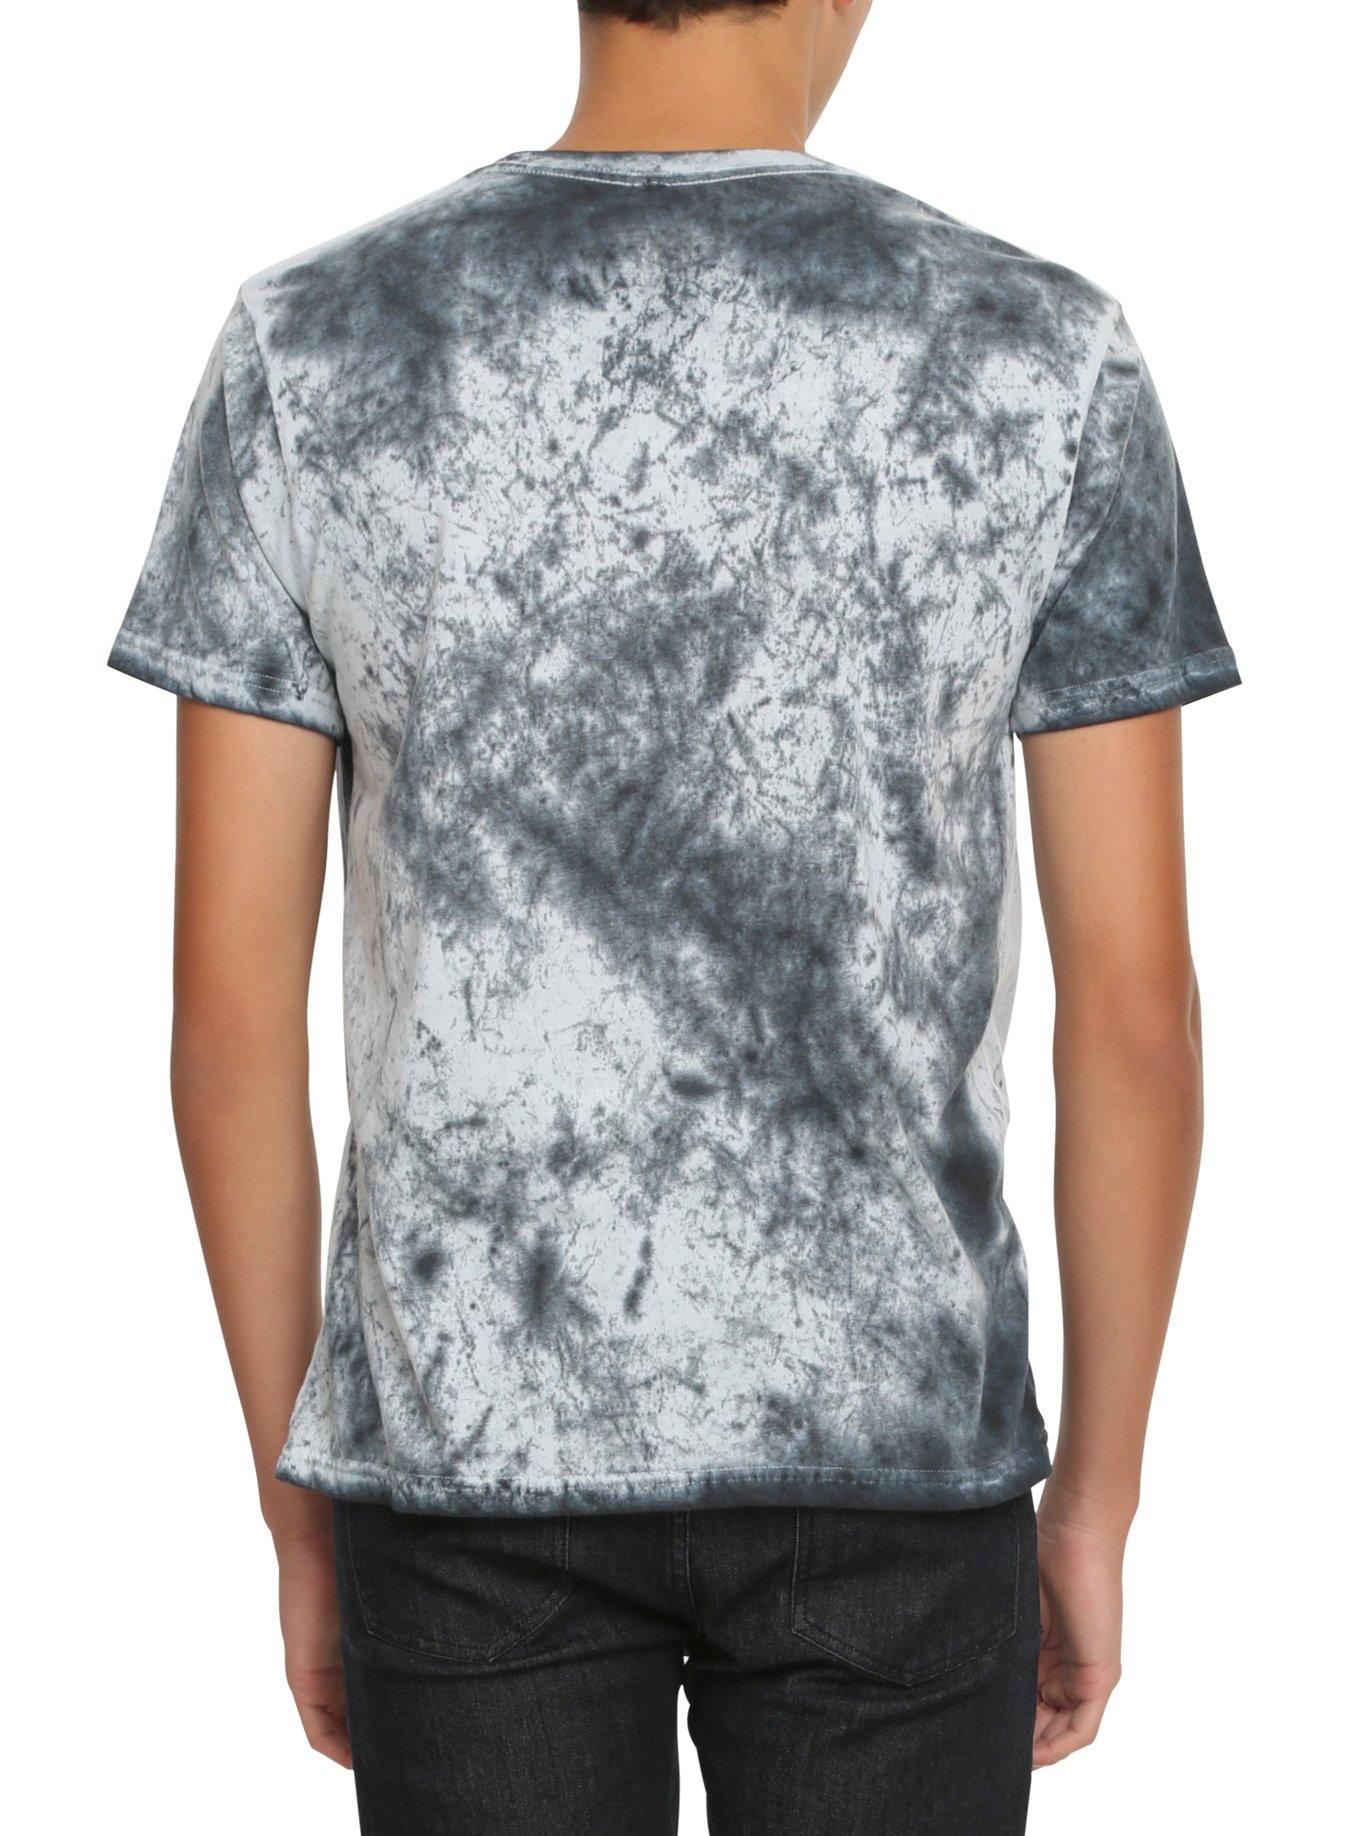 A Little Space Acid Wash T-Shirt, BLACK, alternate